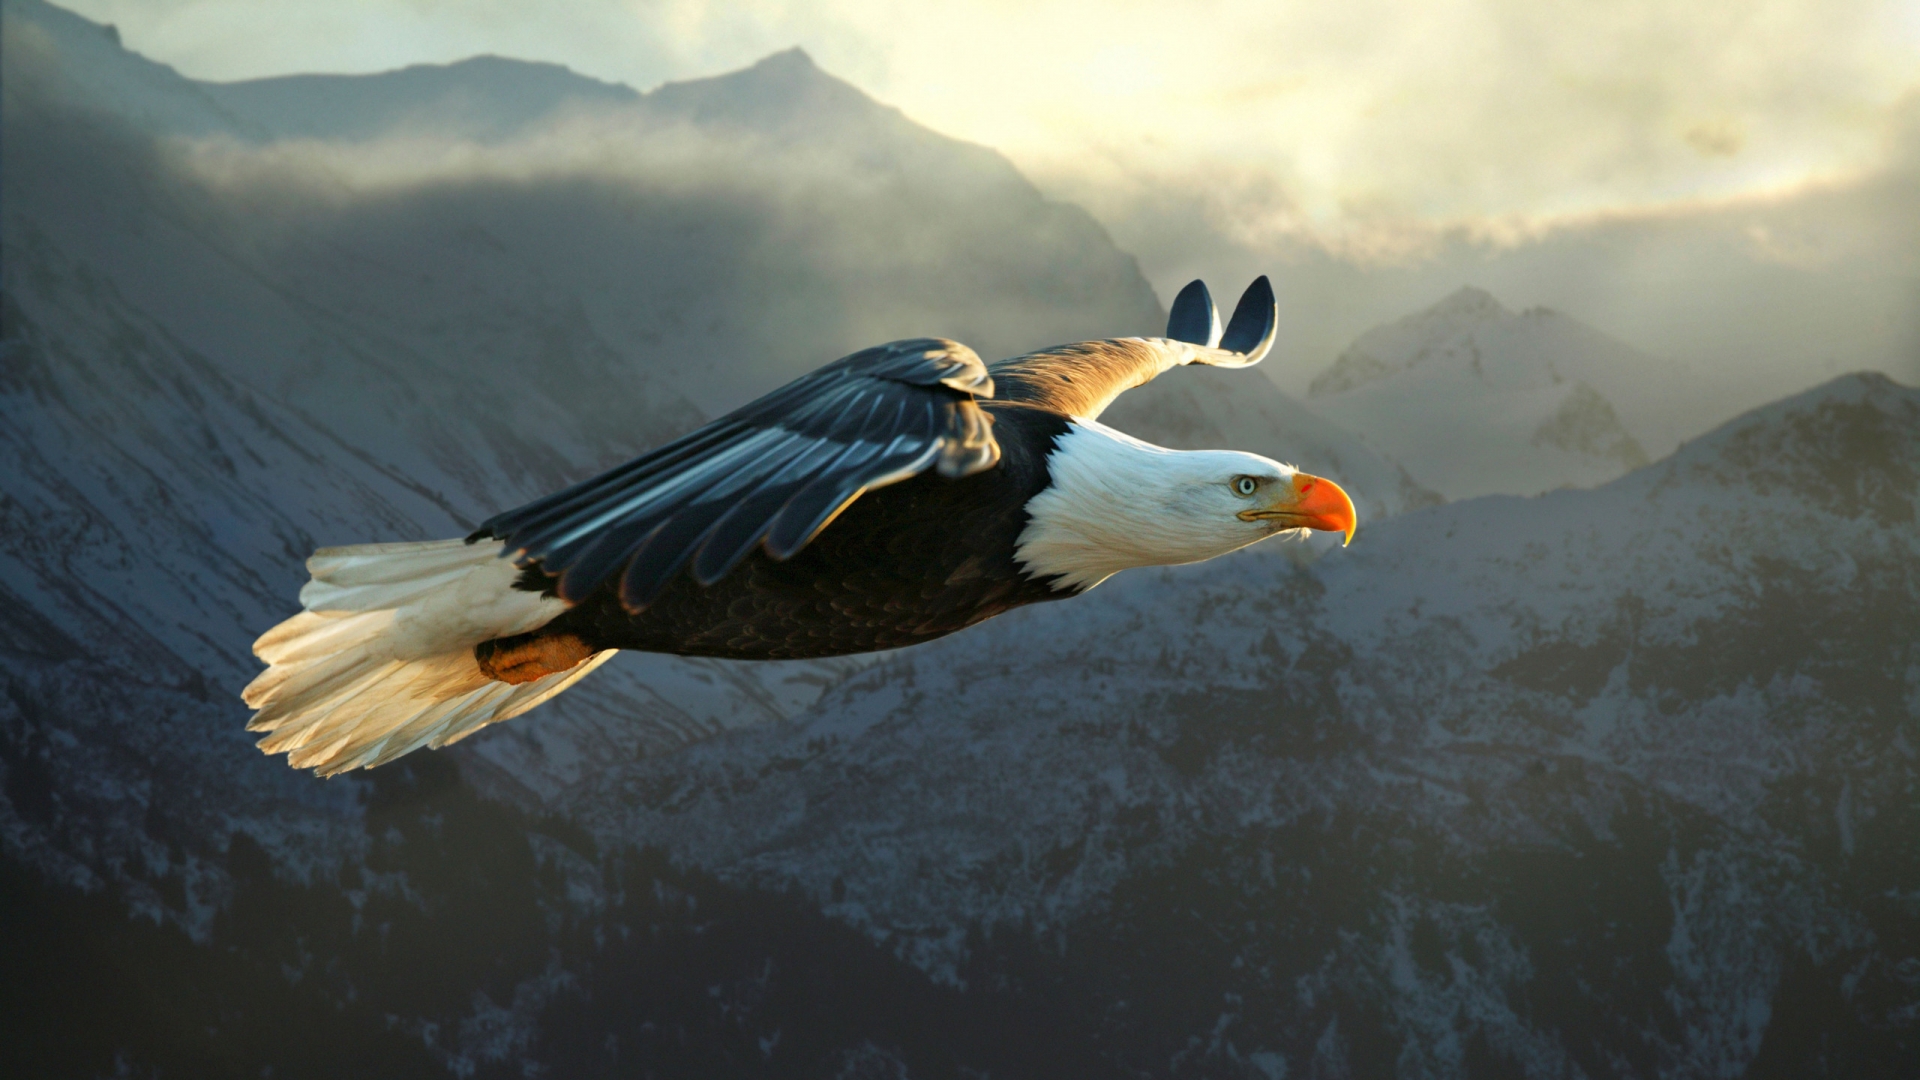 Big Eagle Flying for 1920 x 1080 HDTV 1080p resolution